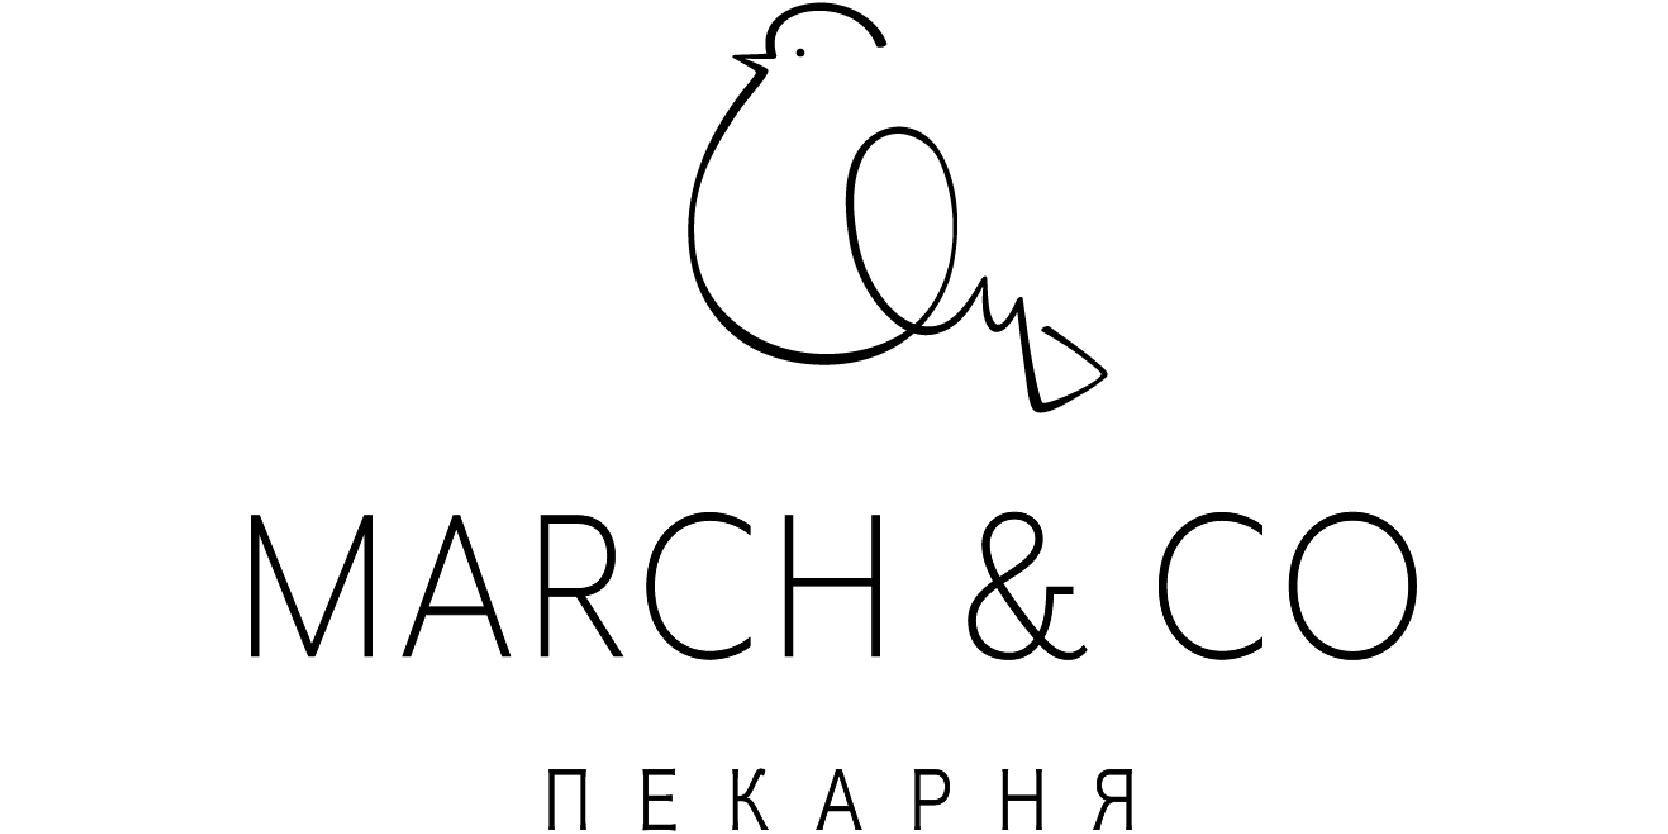 March&co logo